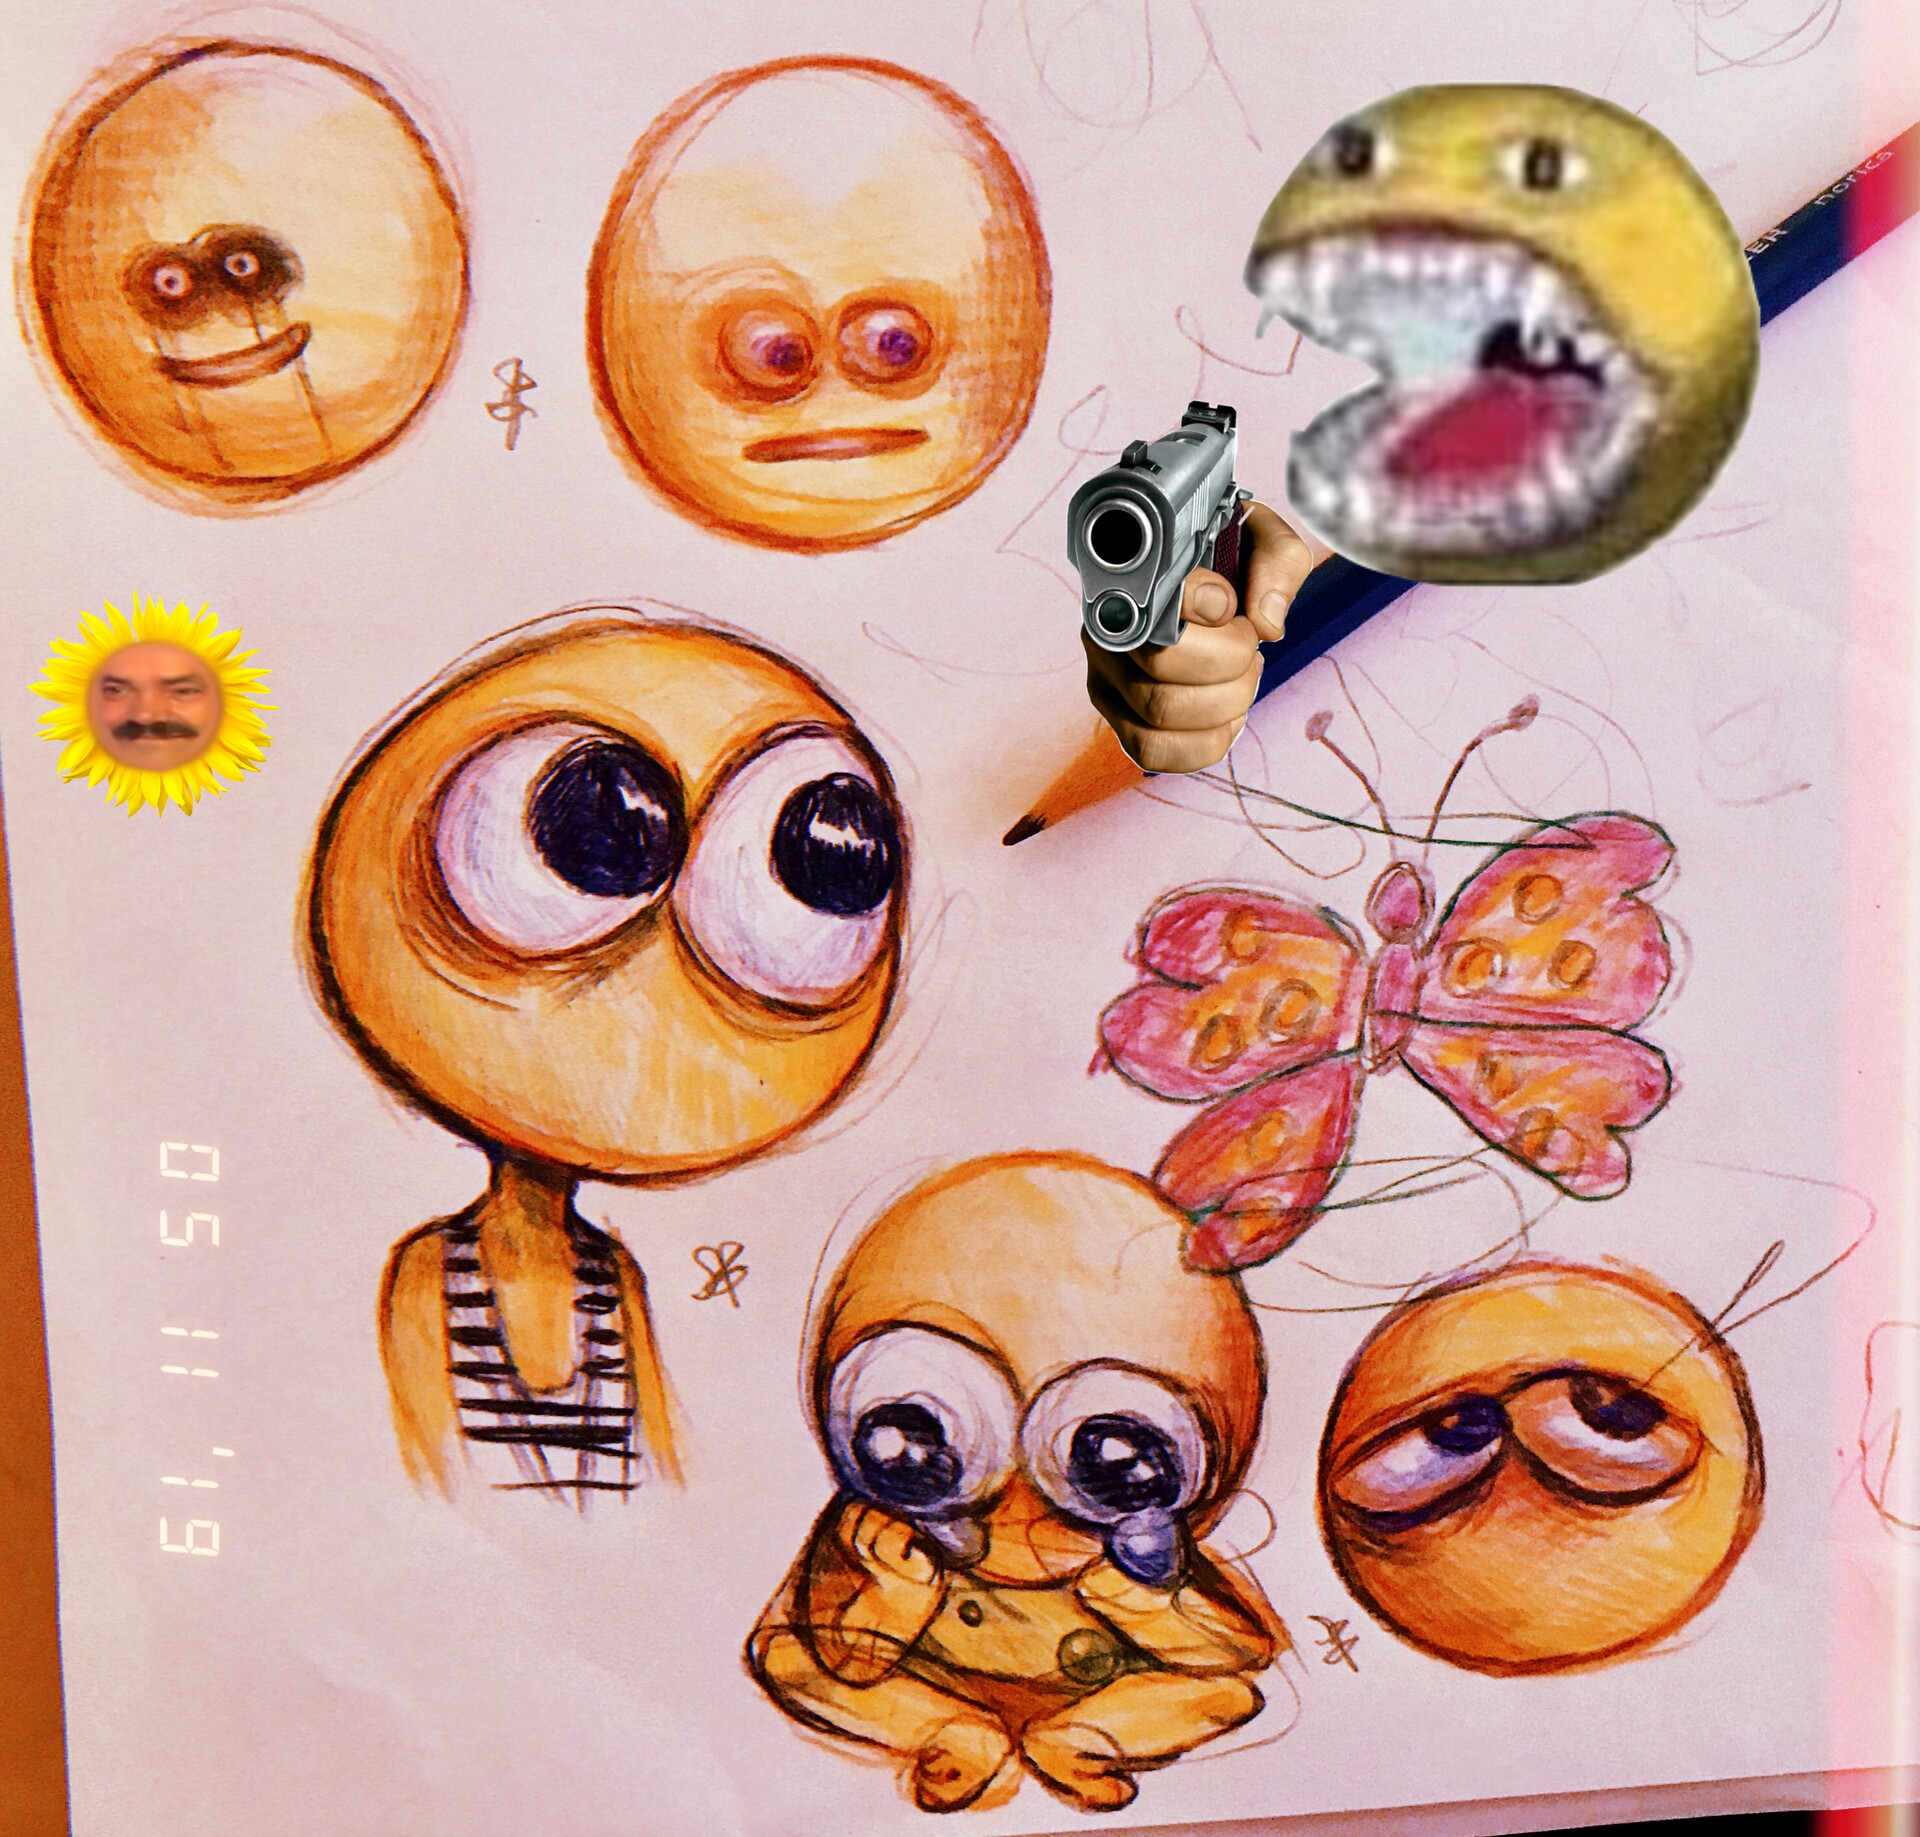 cursed emoji, Cursed Emojis